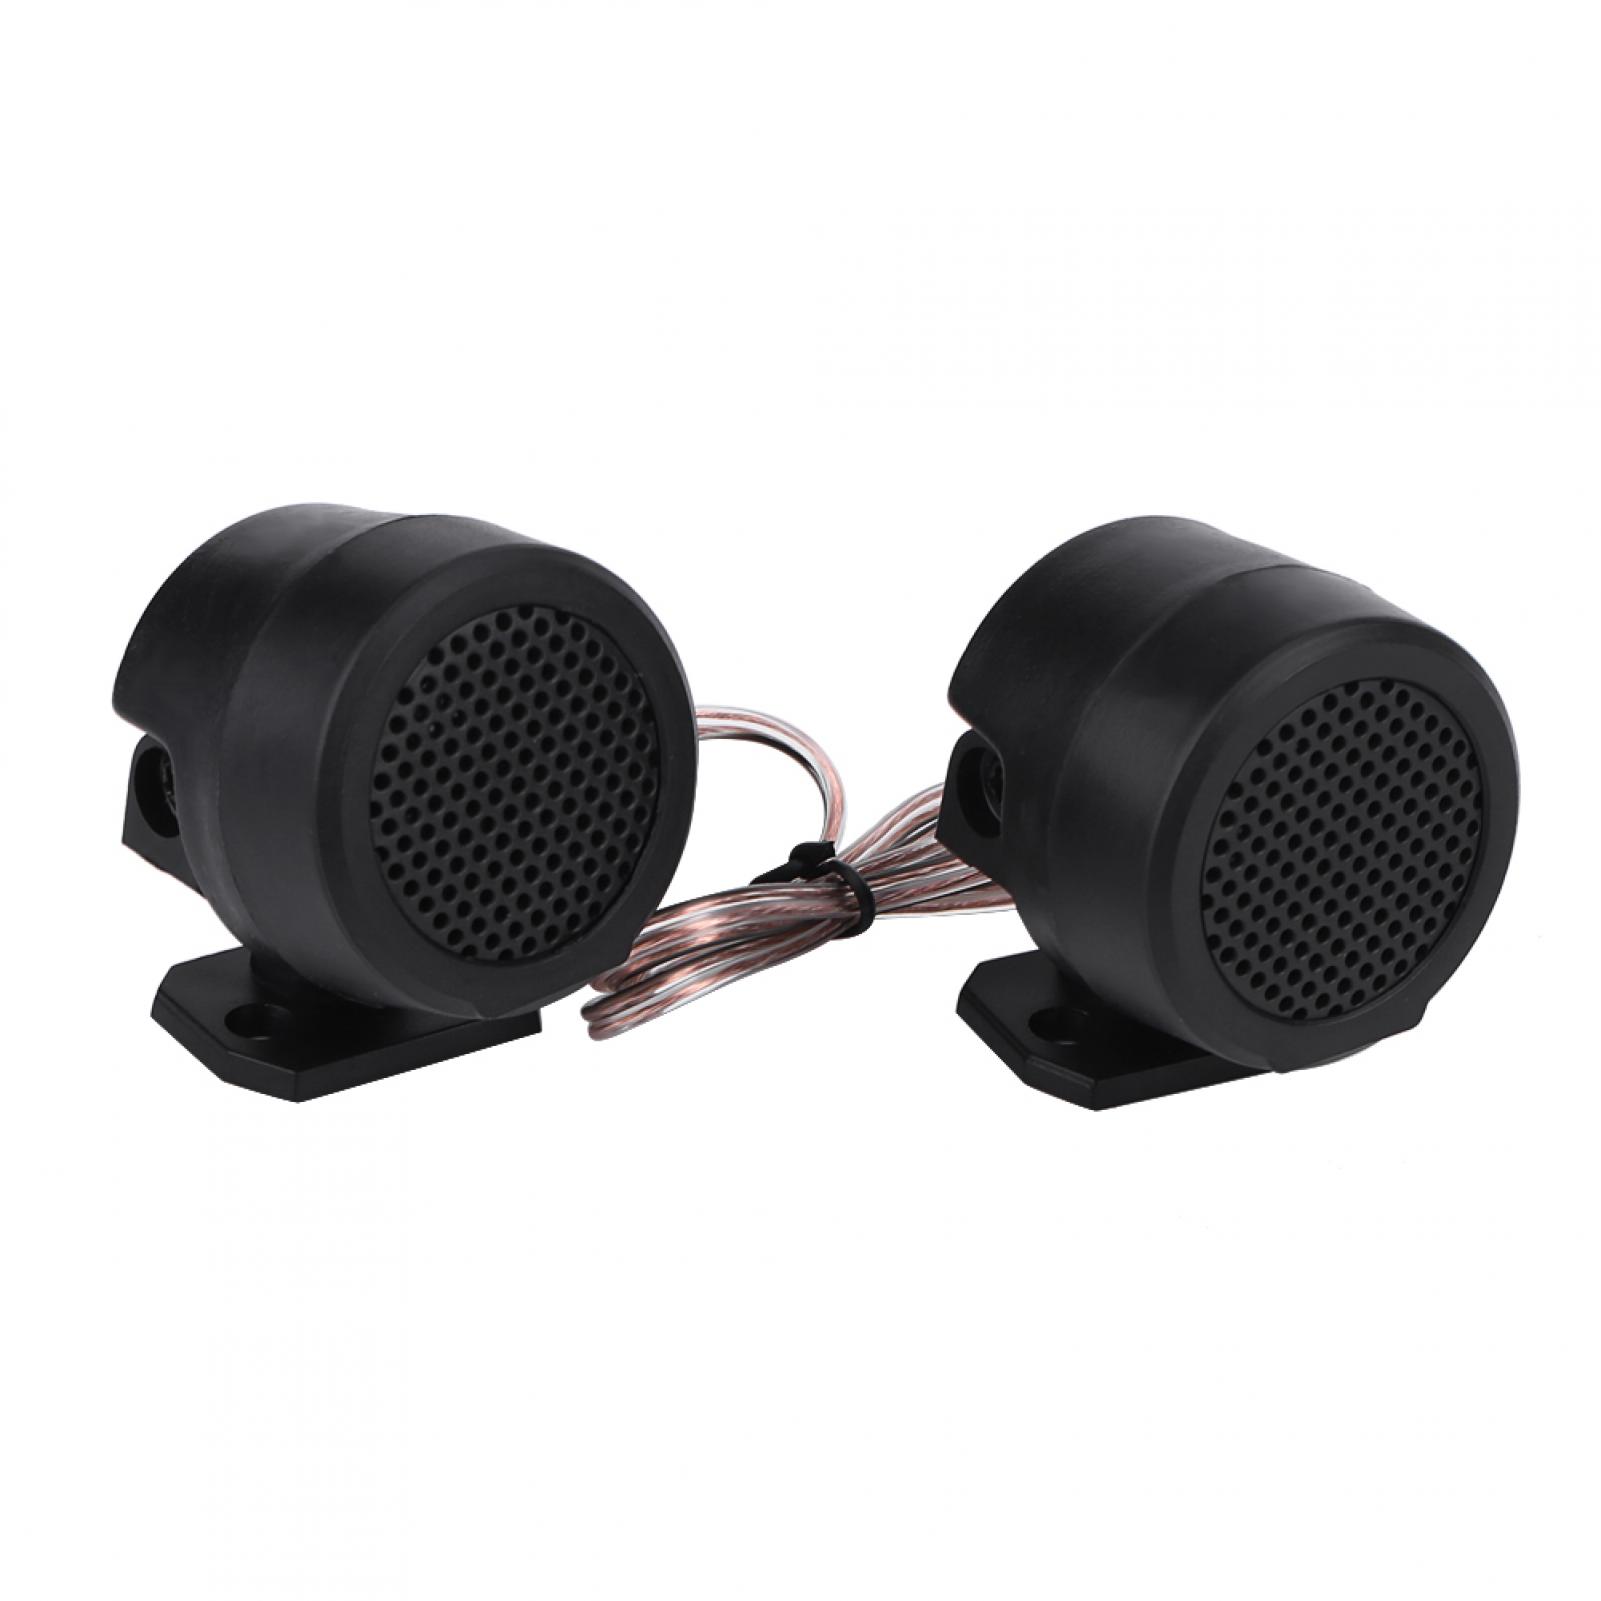 LAFGUR Audio Speaker, Car Speaker, 2Pcs For Car For Car Component Stereo Car Tweeter Car Audio System - image 3 of 8